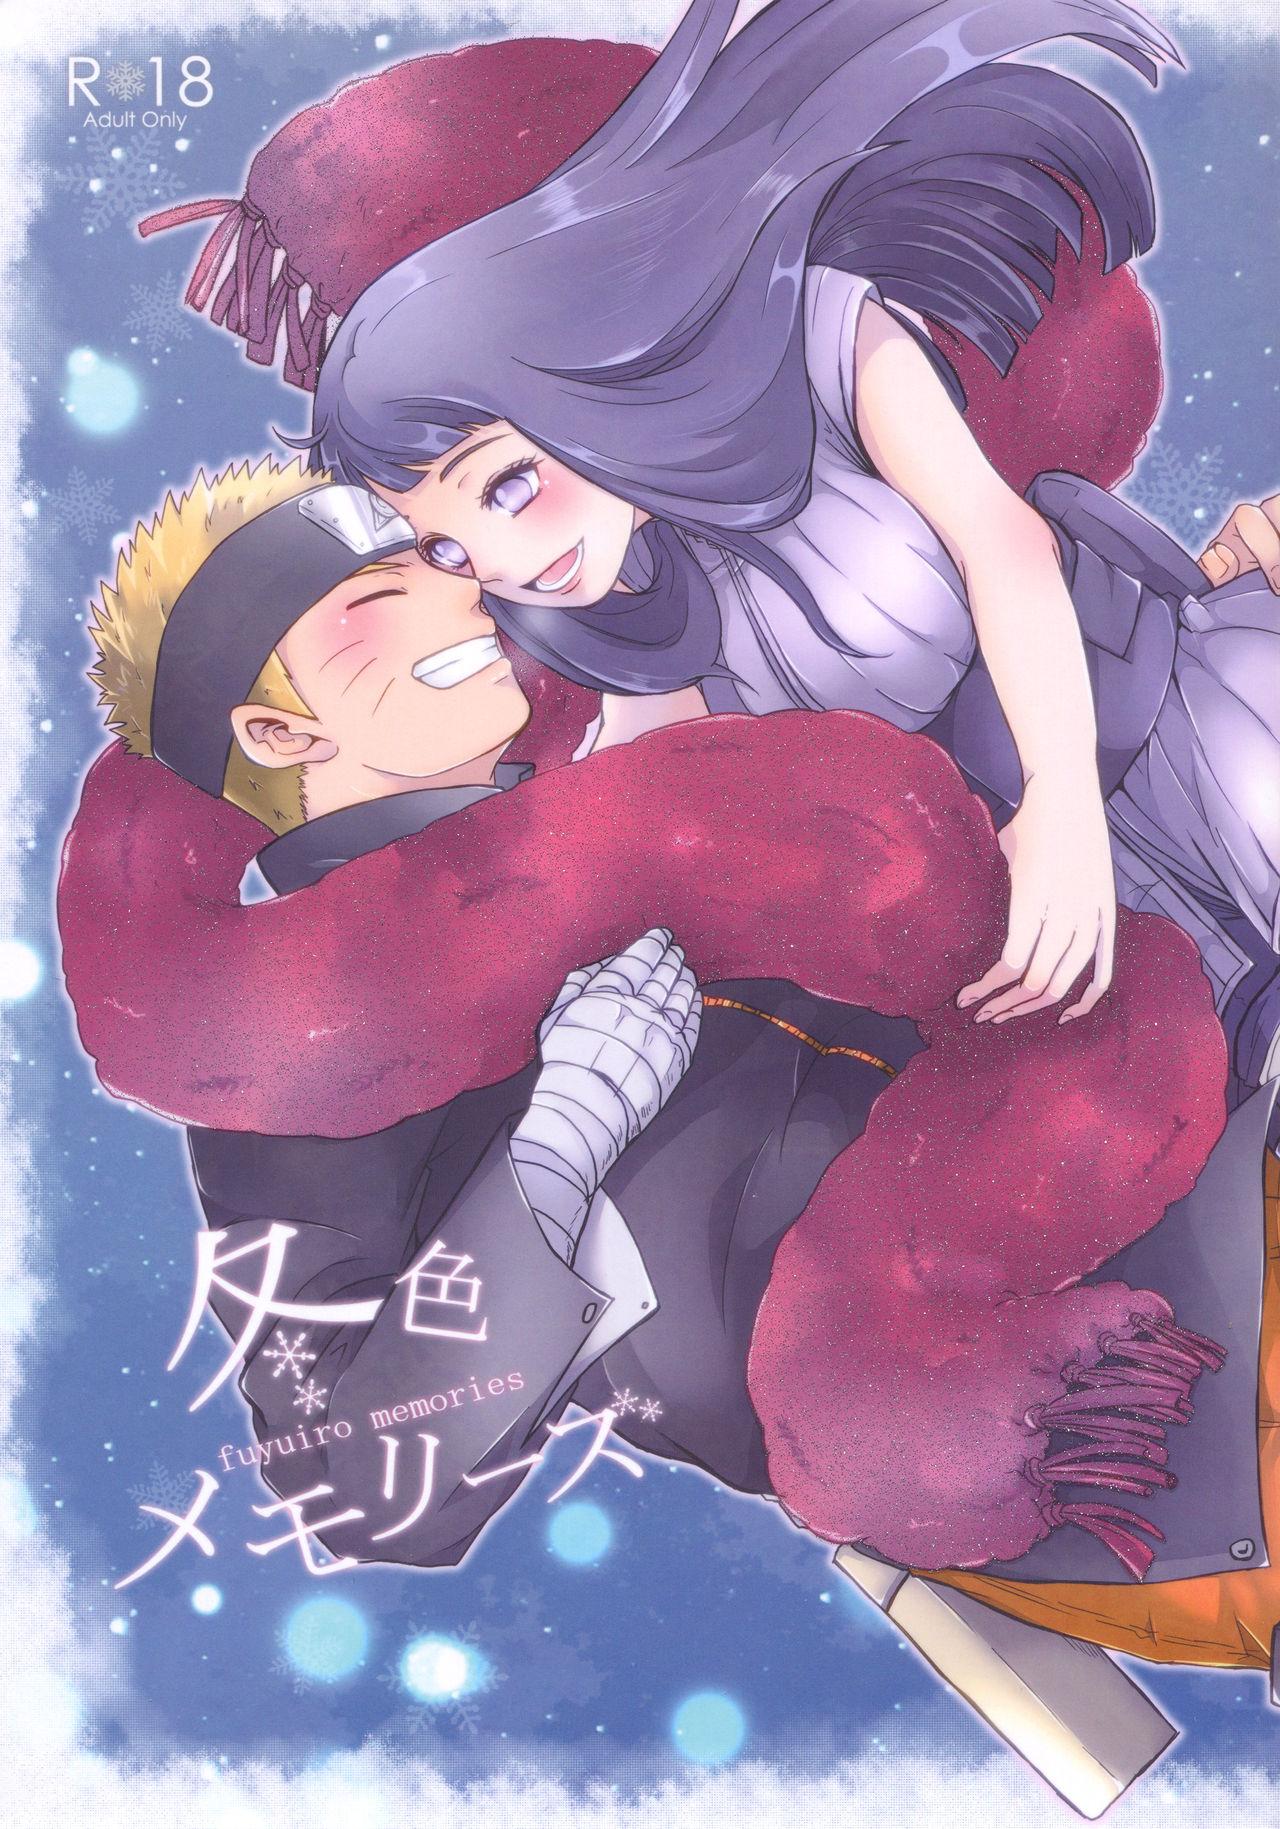 Teen Fuyuiro Memories - Winter Color Memories - Naruto Boruto Sextape - Picture 1